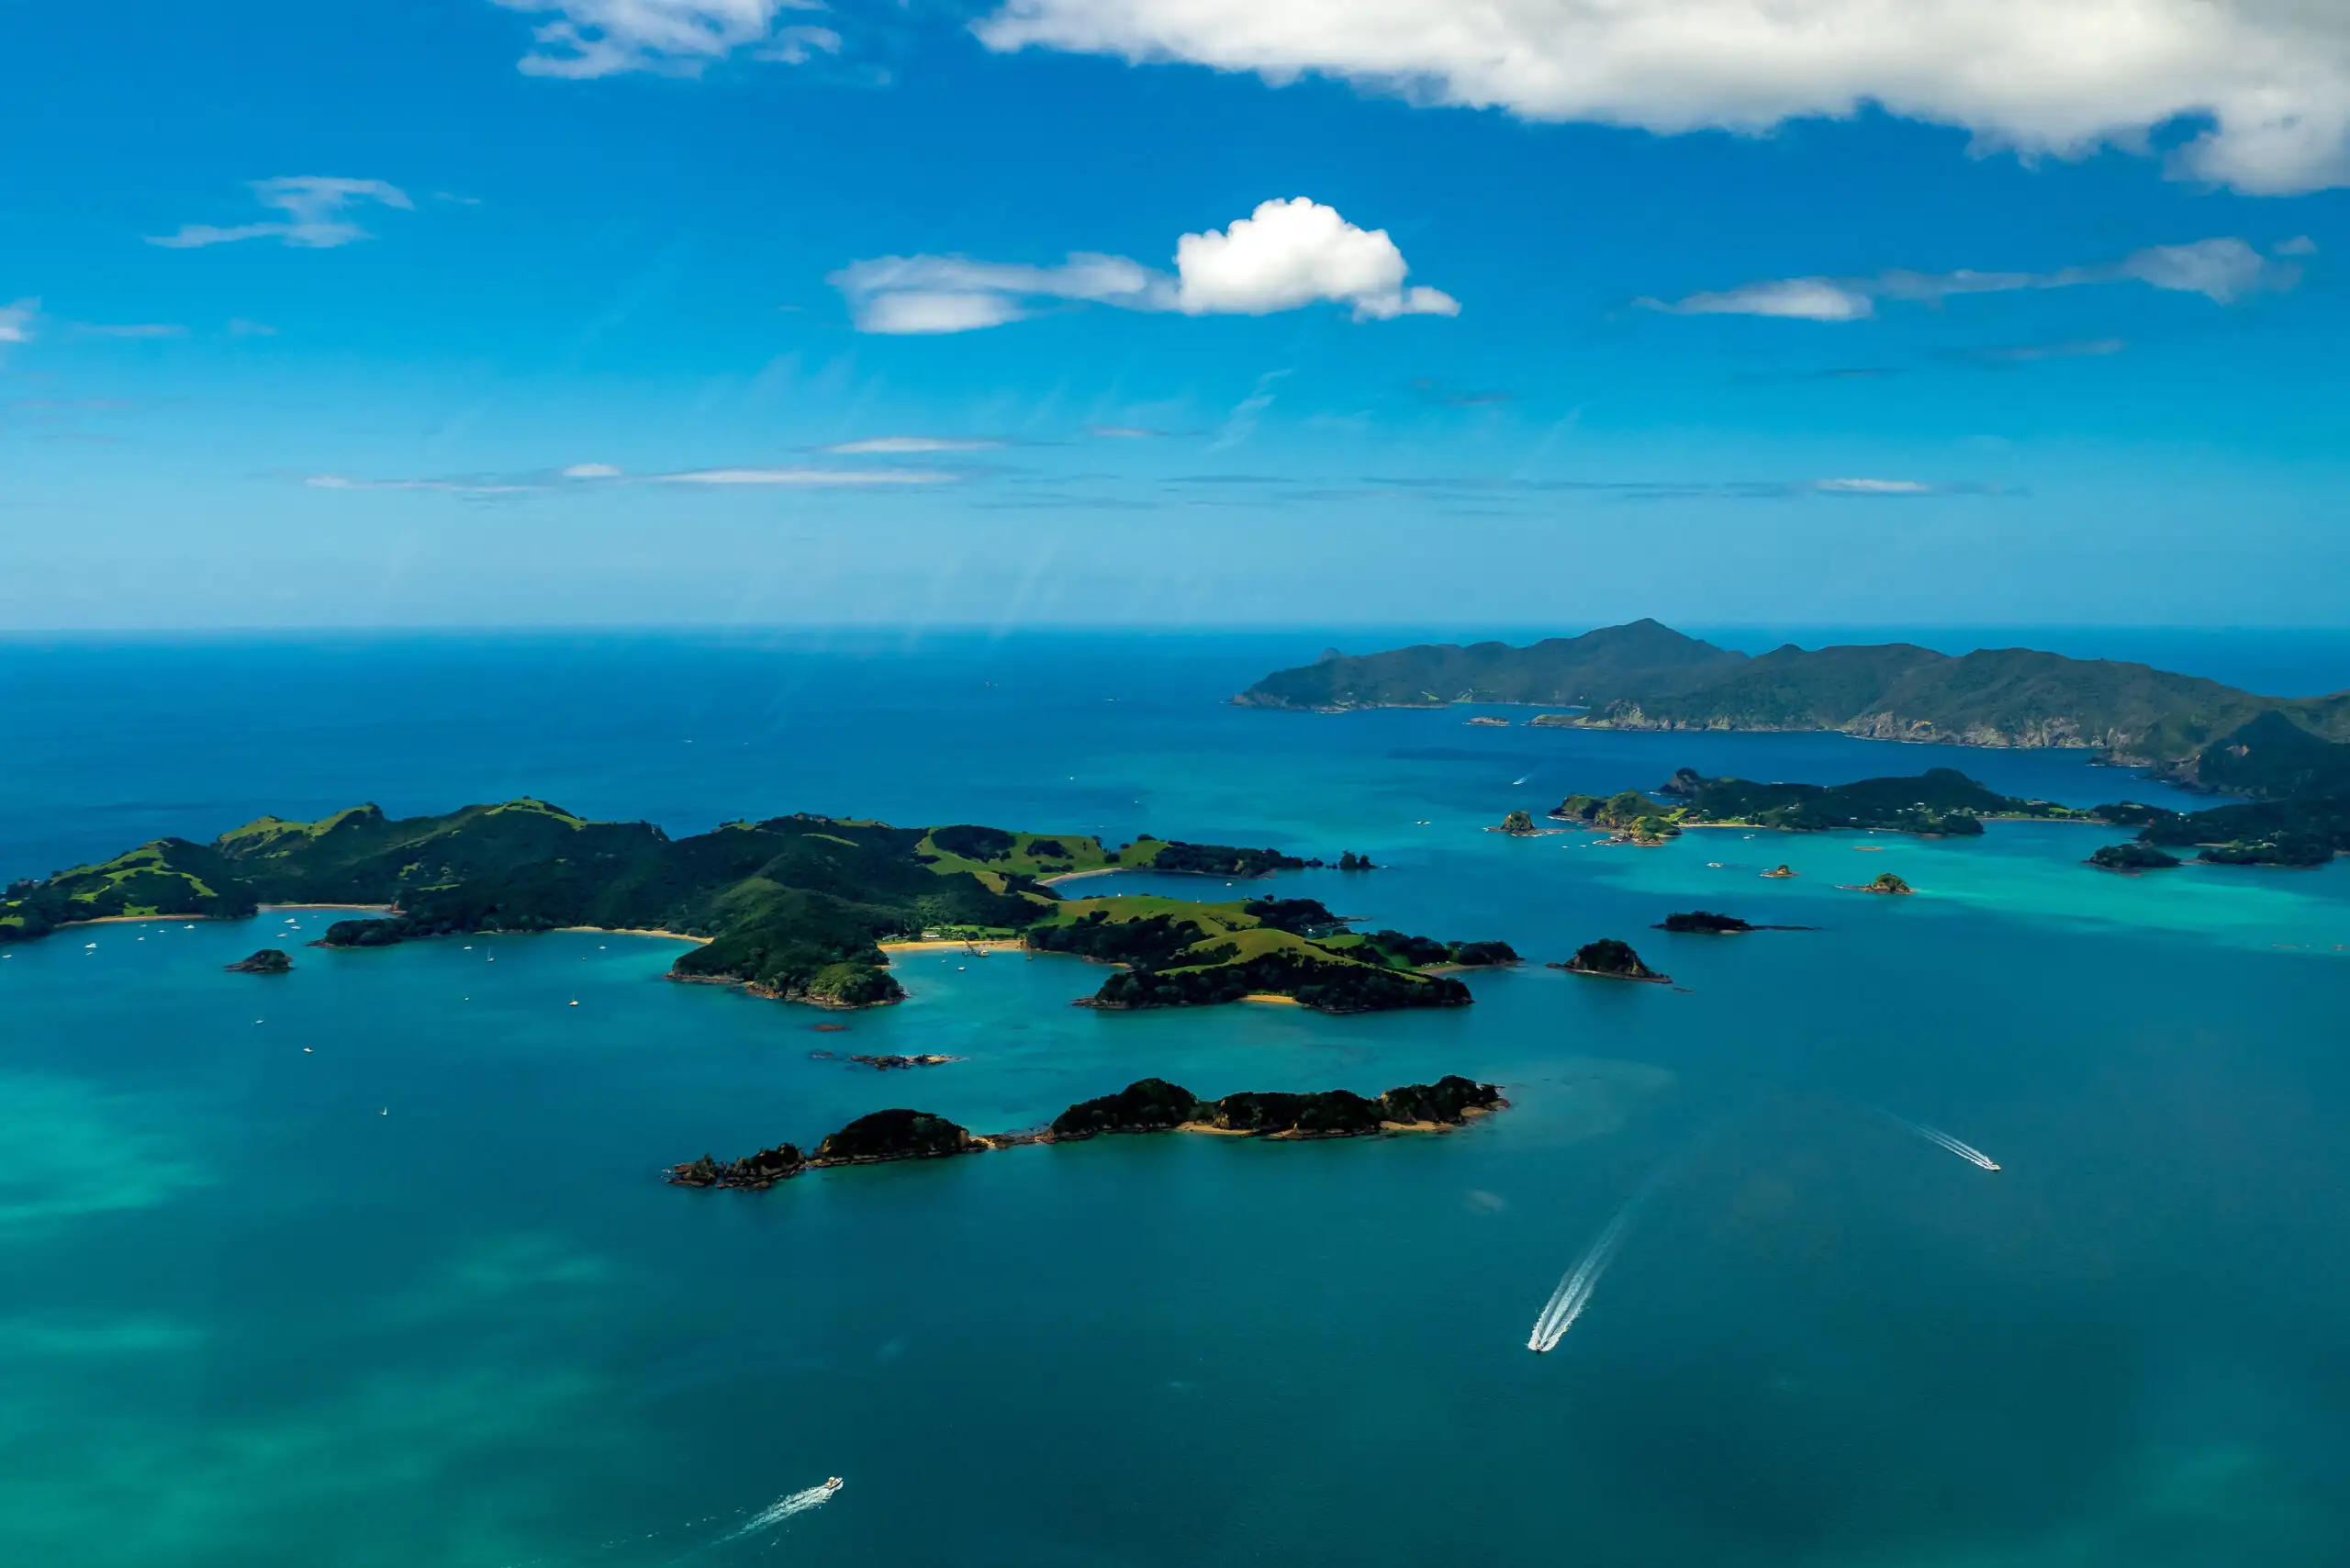 Bay of Islands in New Zealand